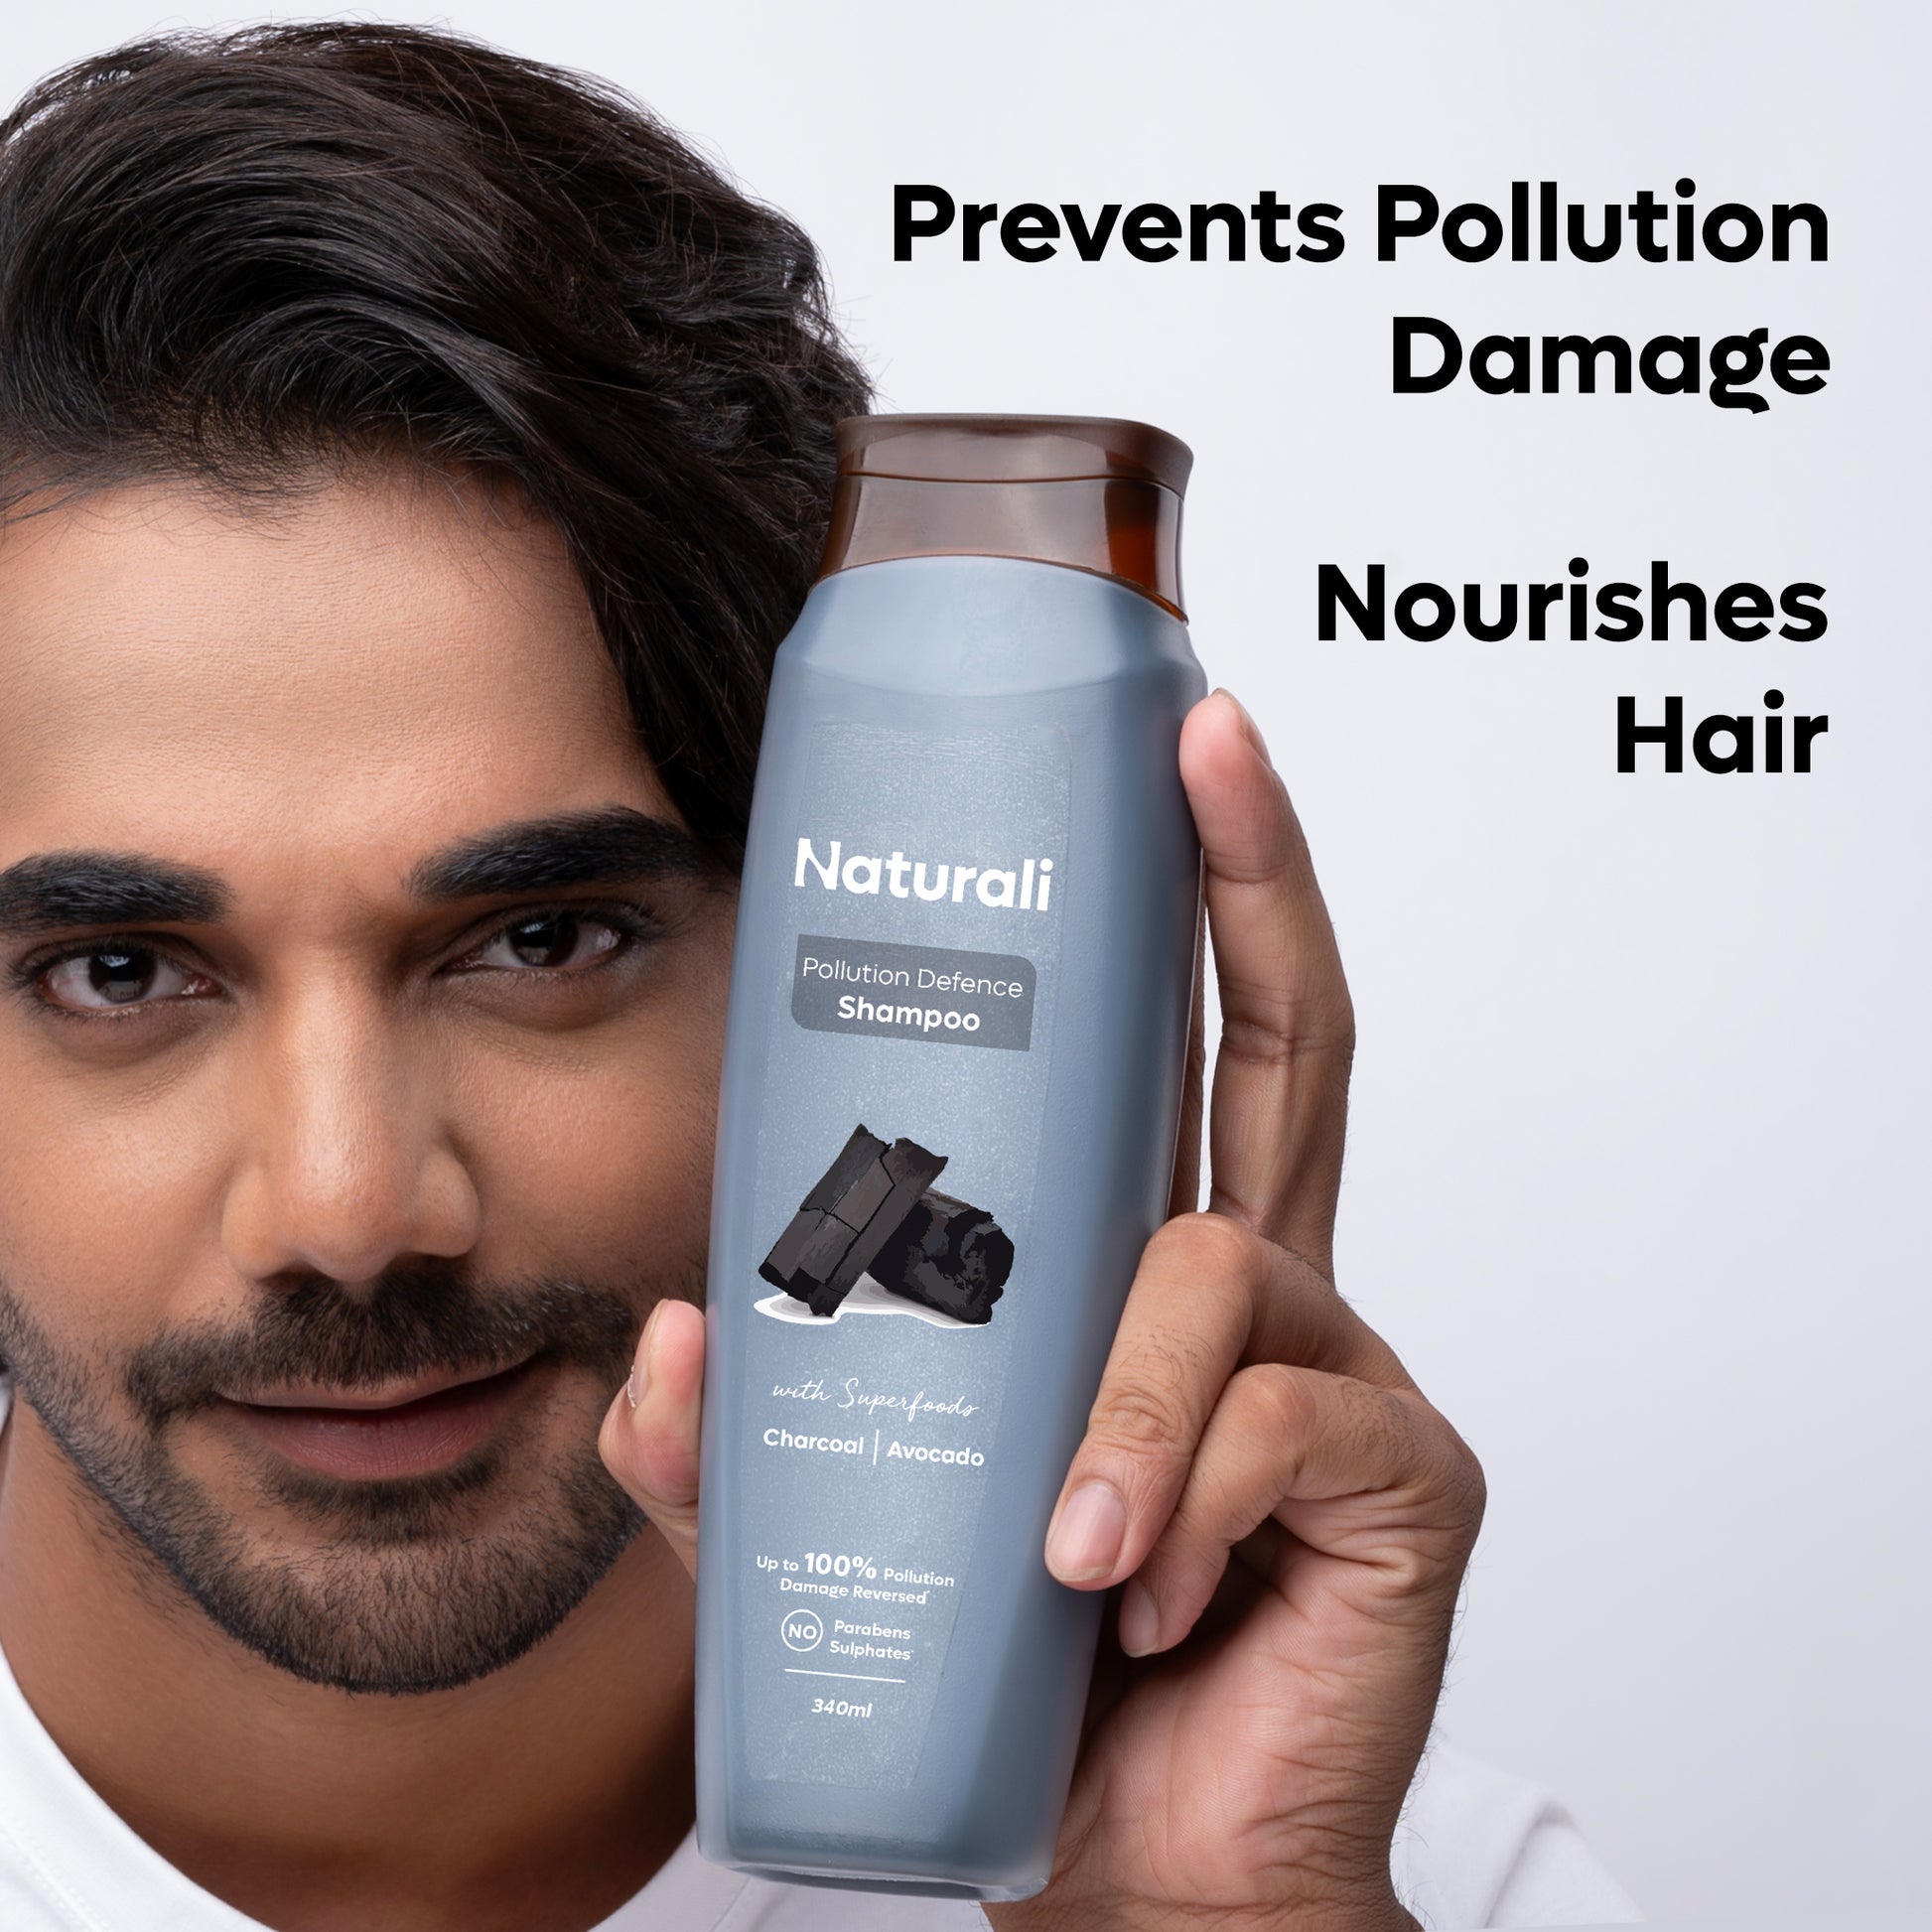 Naturali Pollution Defence Shampoo